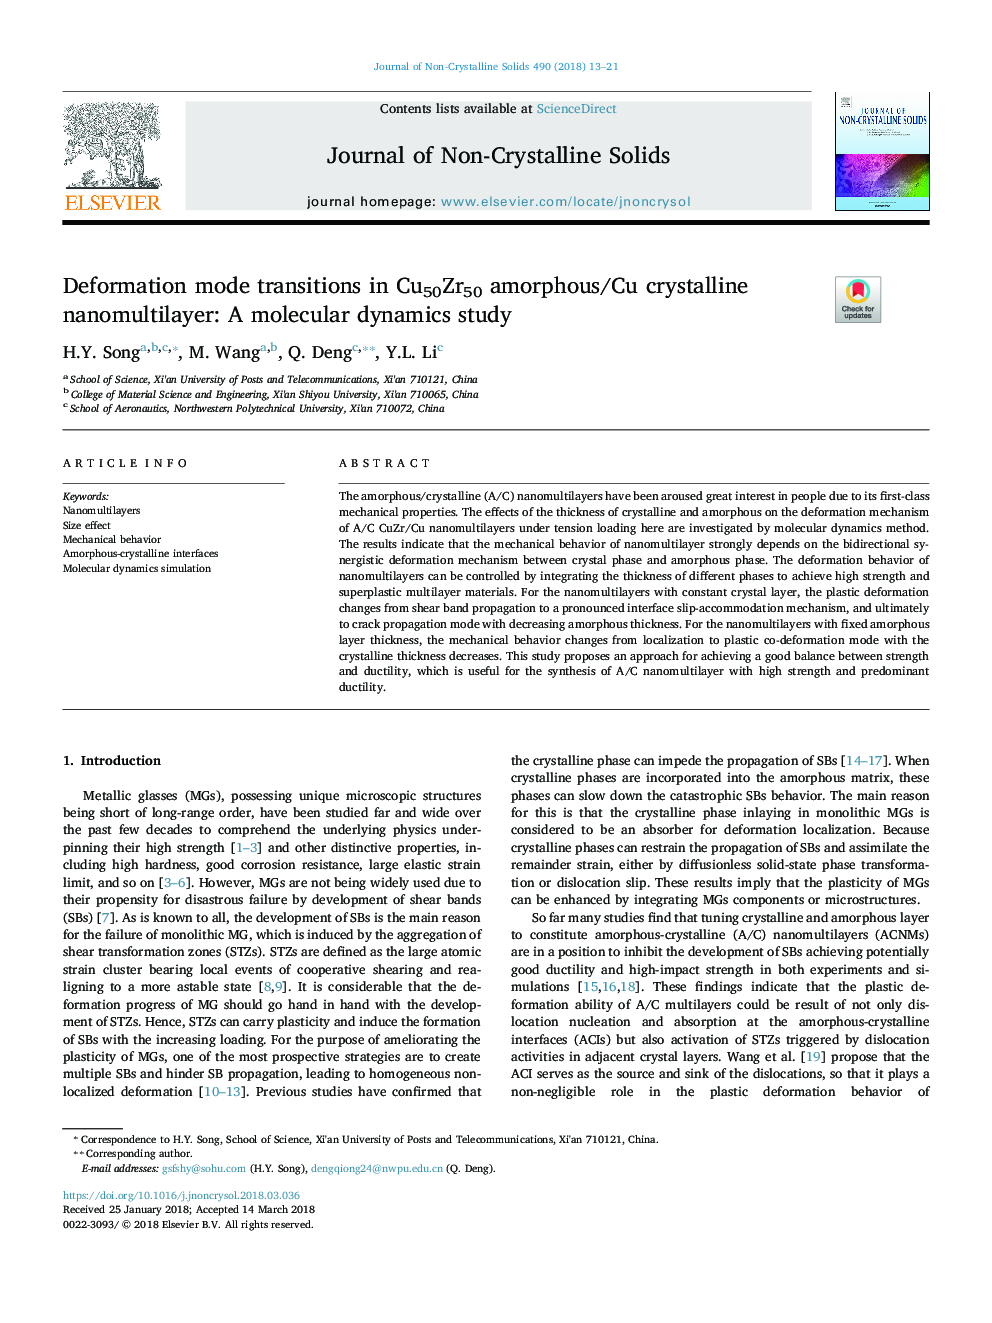 Deformation mode transitions in Cu50Zr50 amorphous/Cu crystalline nanomultilayer: A molecular dynamics study